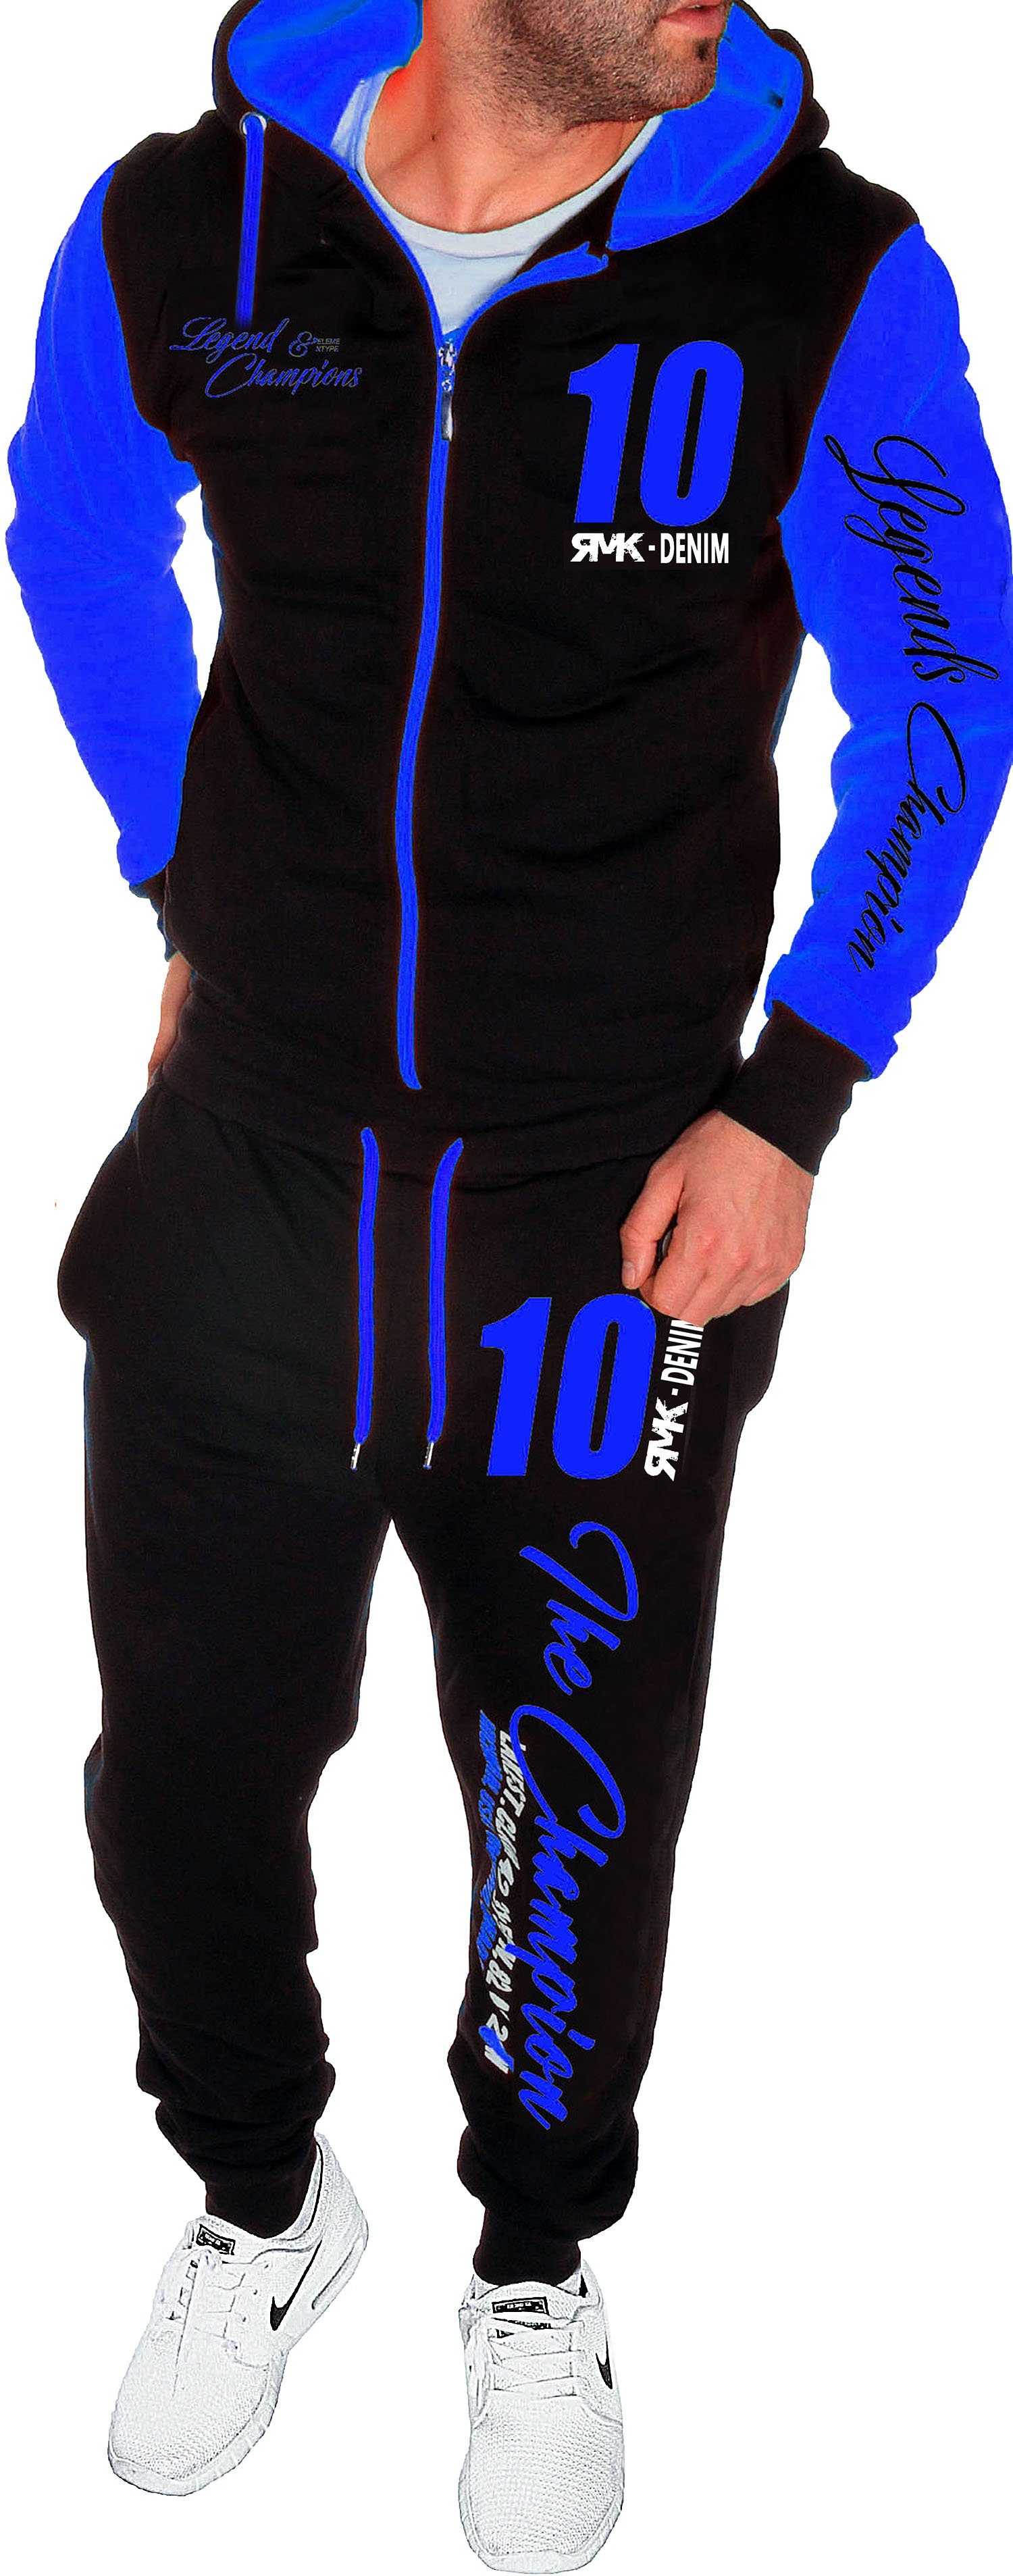 RMK Jogginganzug Herren Trainingsanzug Sportanzug Streetwear Fitness Jacke mit Kapuze Blau